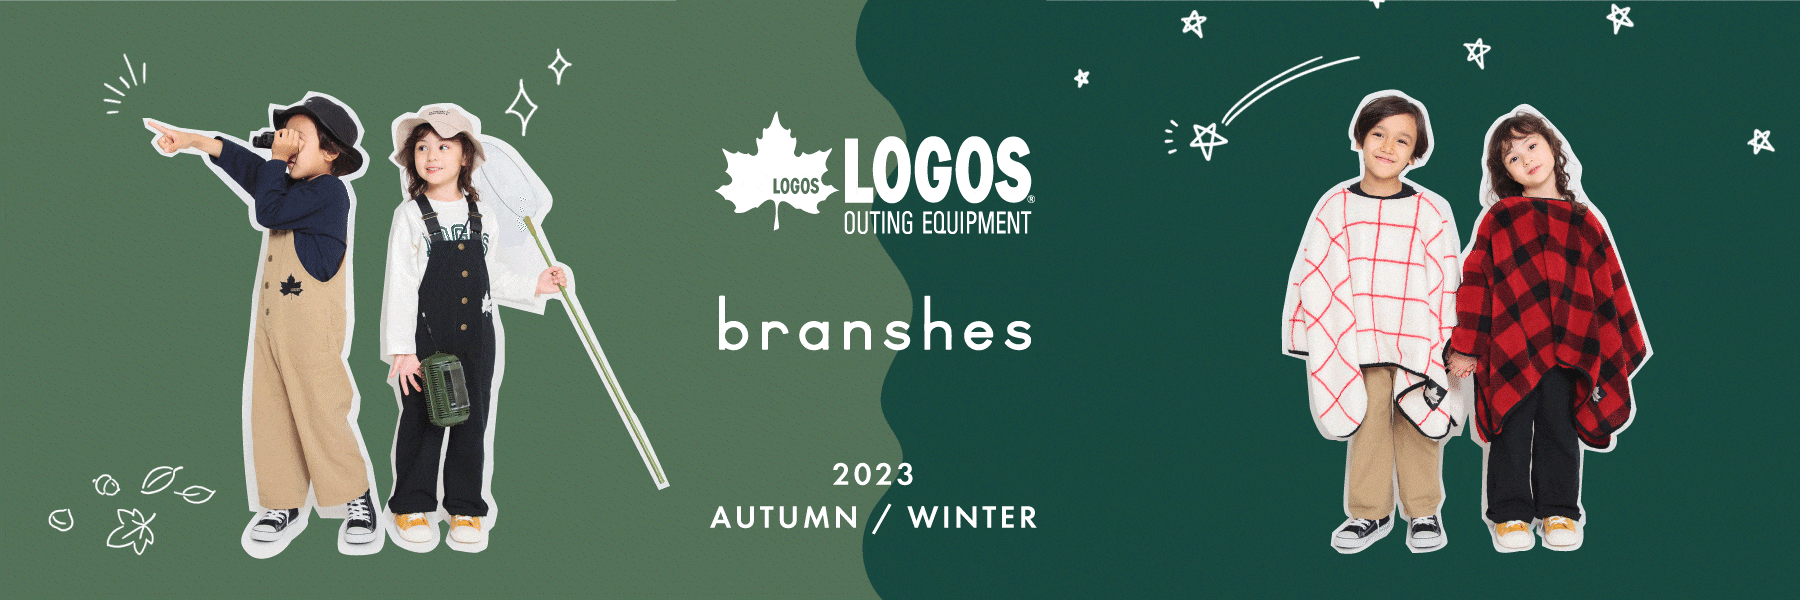 LOGOS×branshes 2023 AUTUMN/WINTER